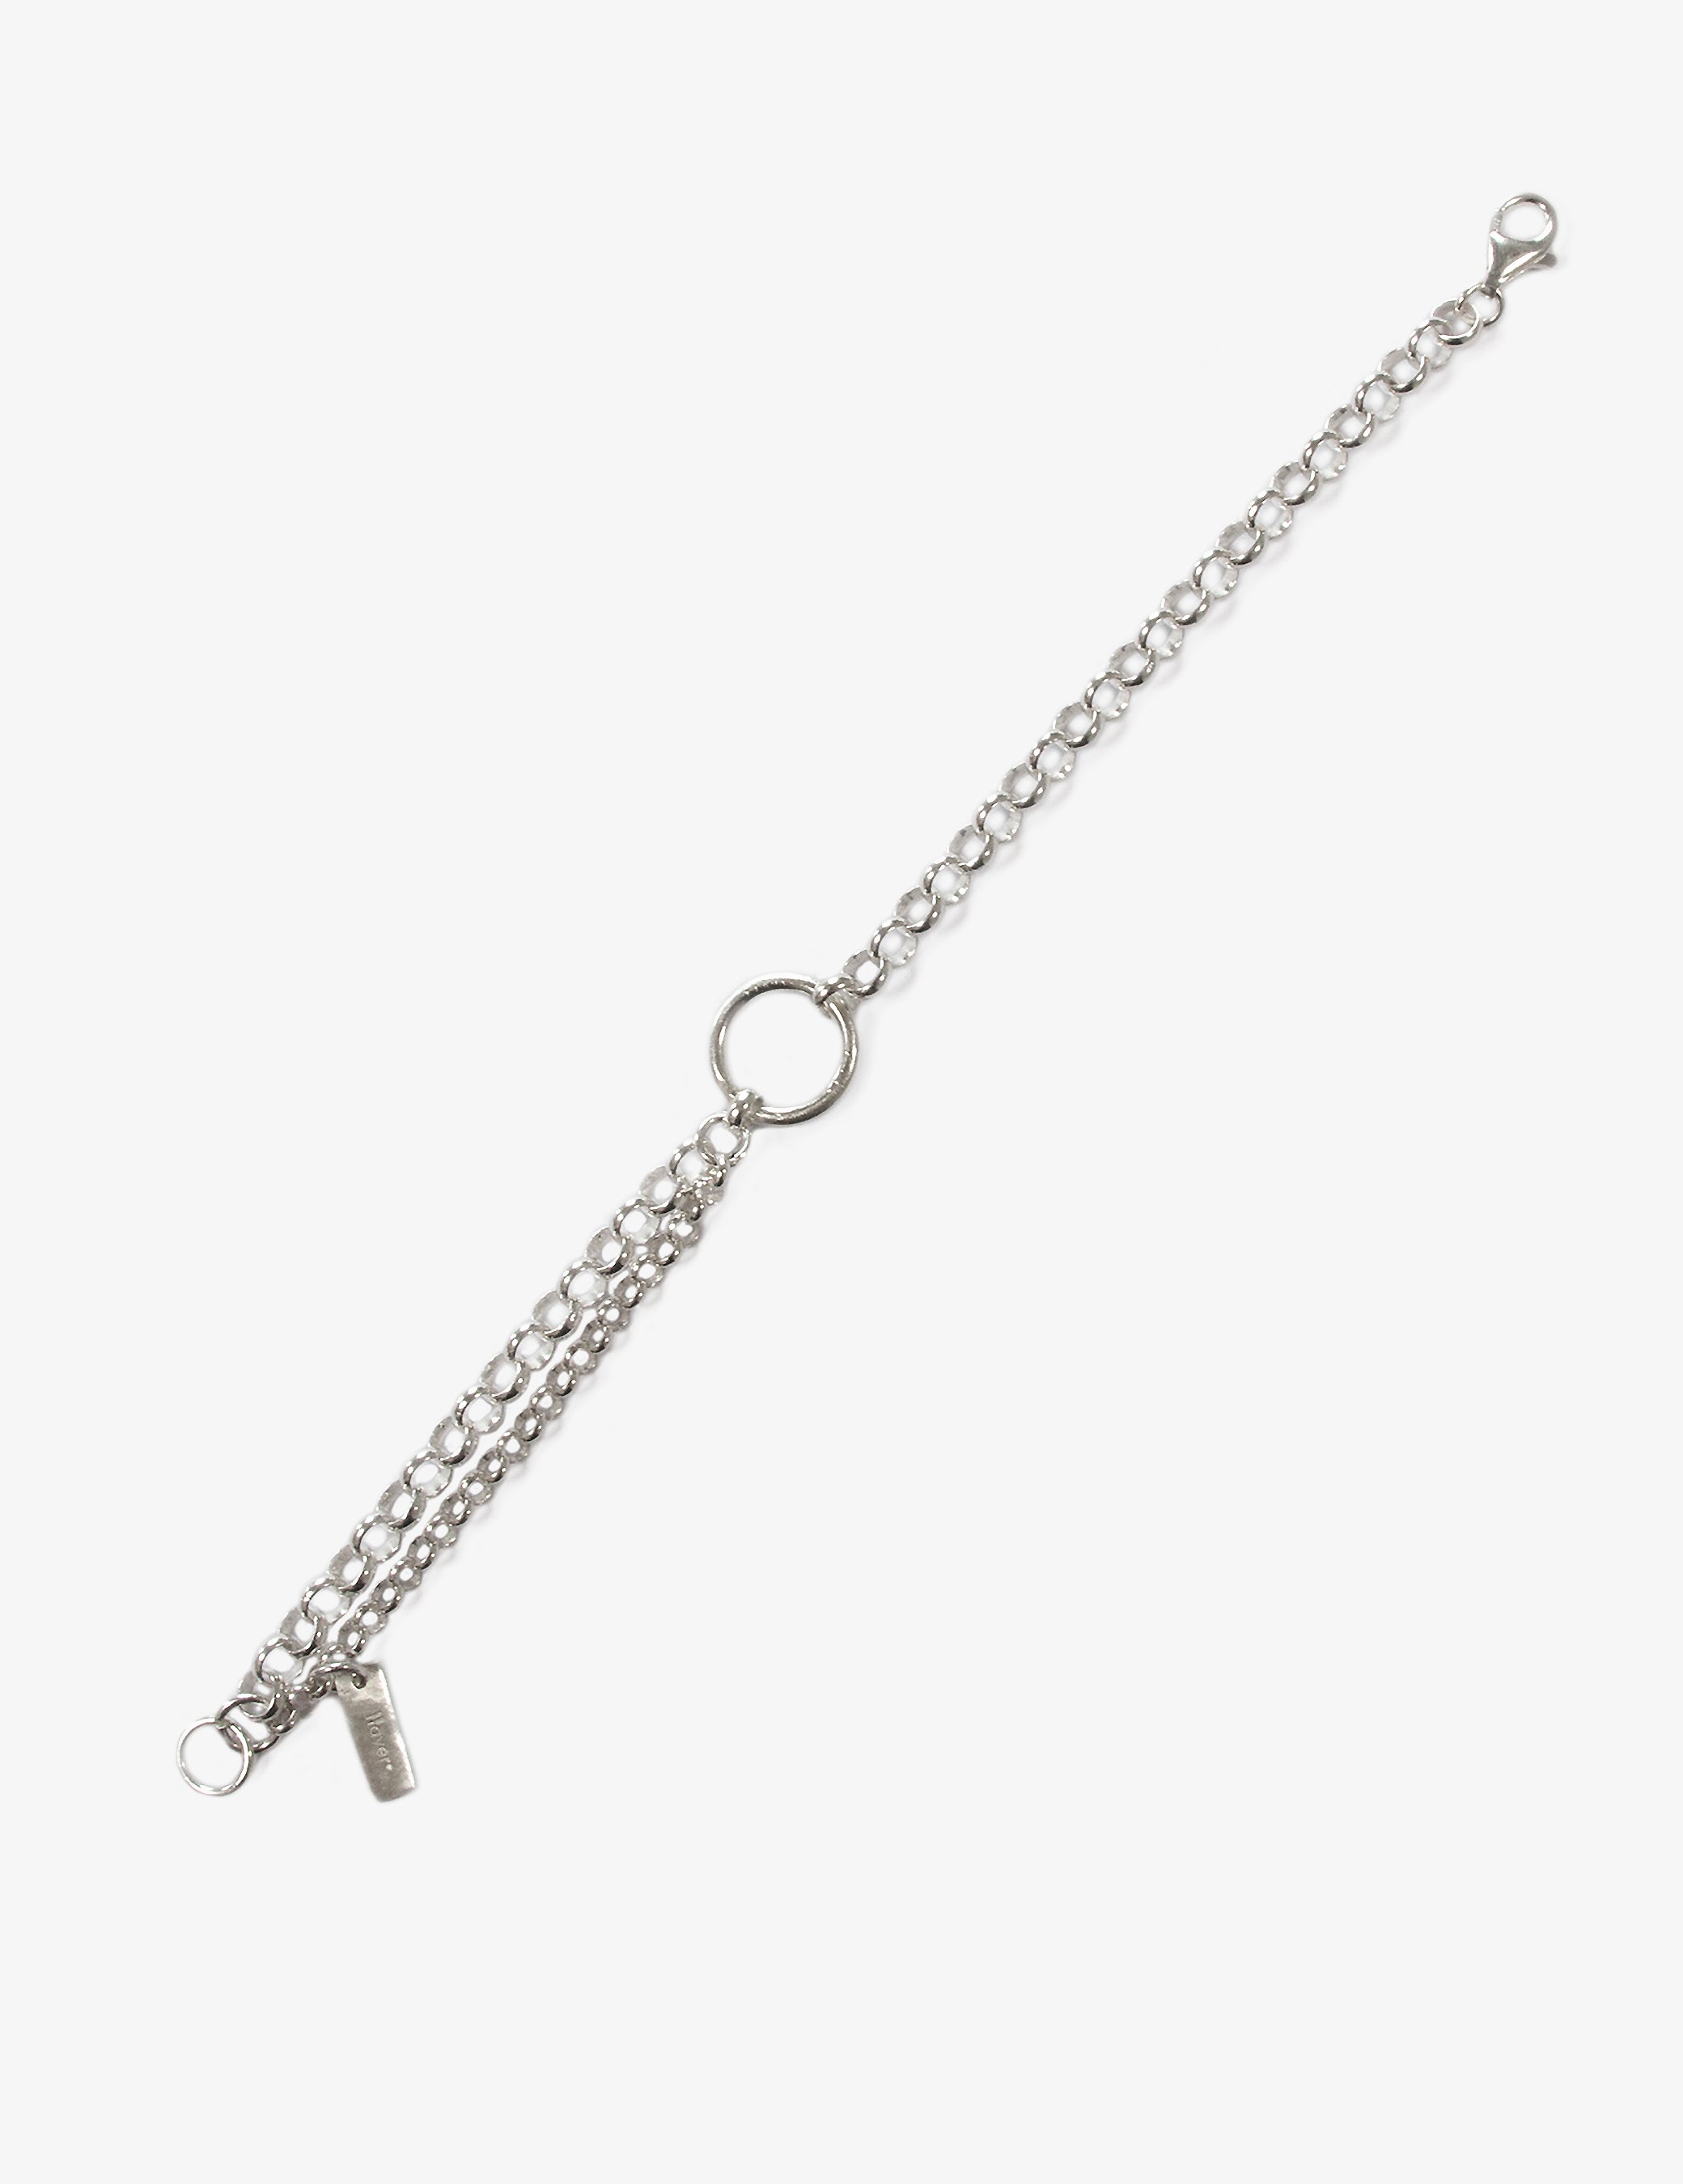 llayers minimal unisex jewelry Handmade men women silver chain bracelet with rings - Made In Brookyn New York